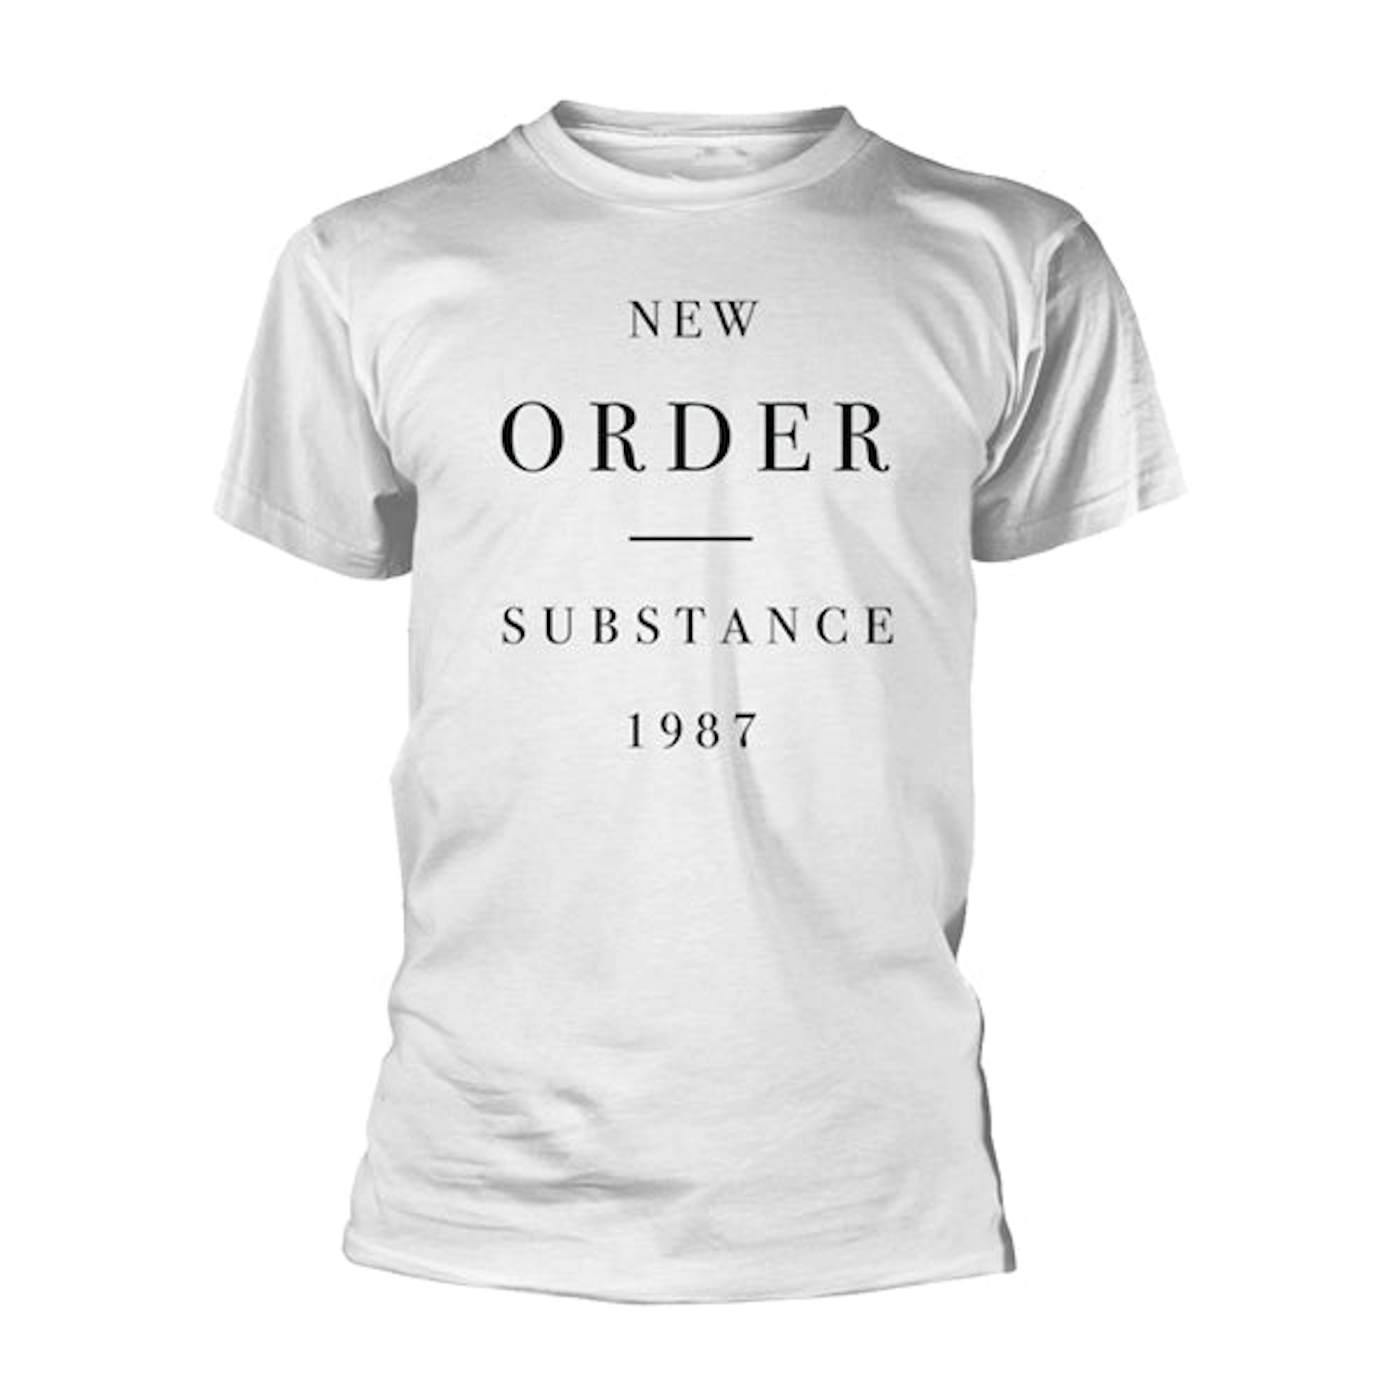 New Order T-Shirt - Substance